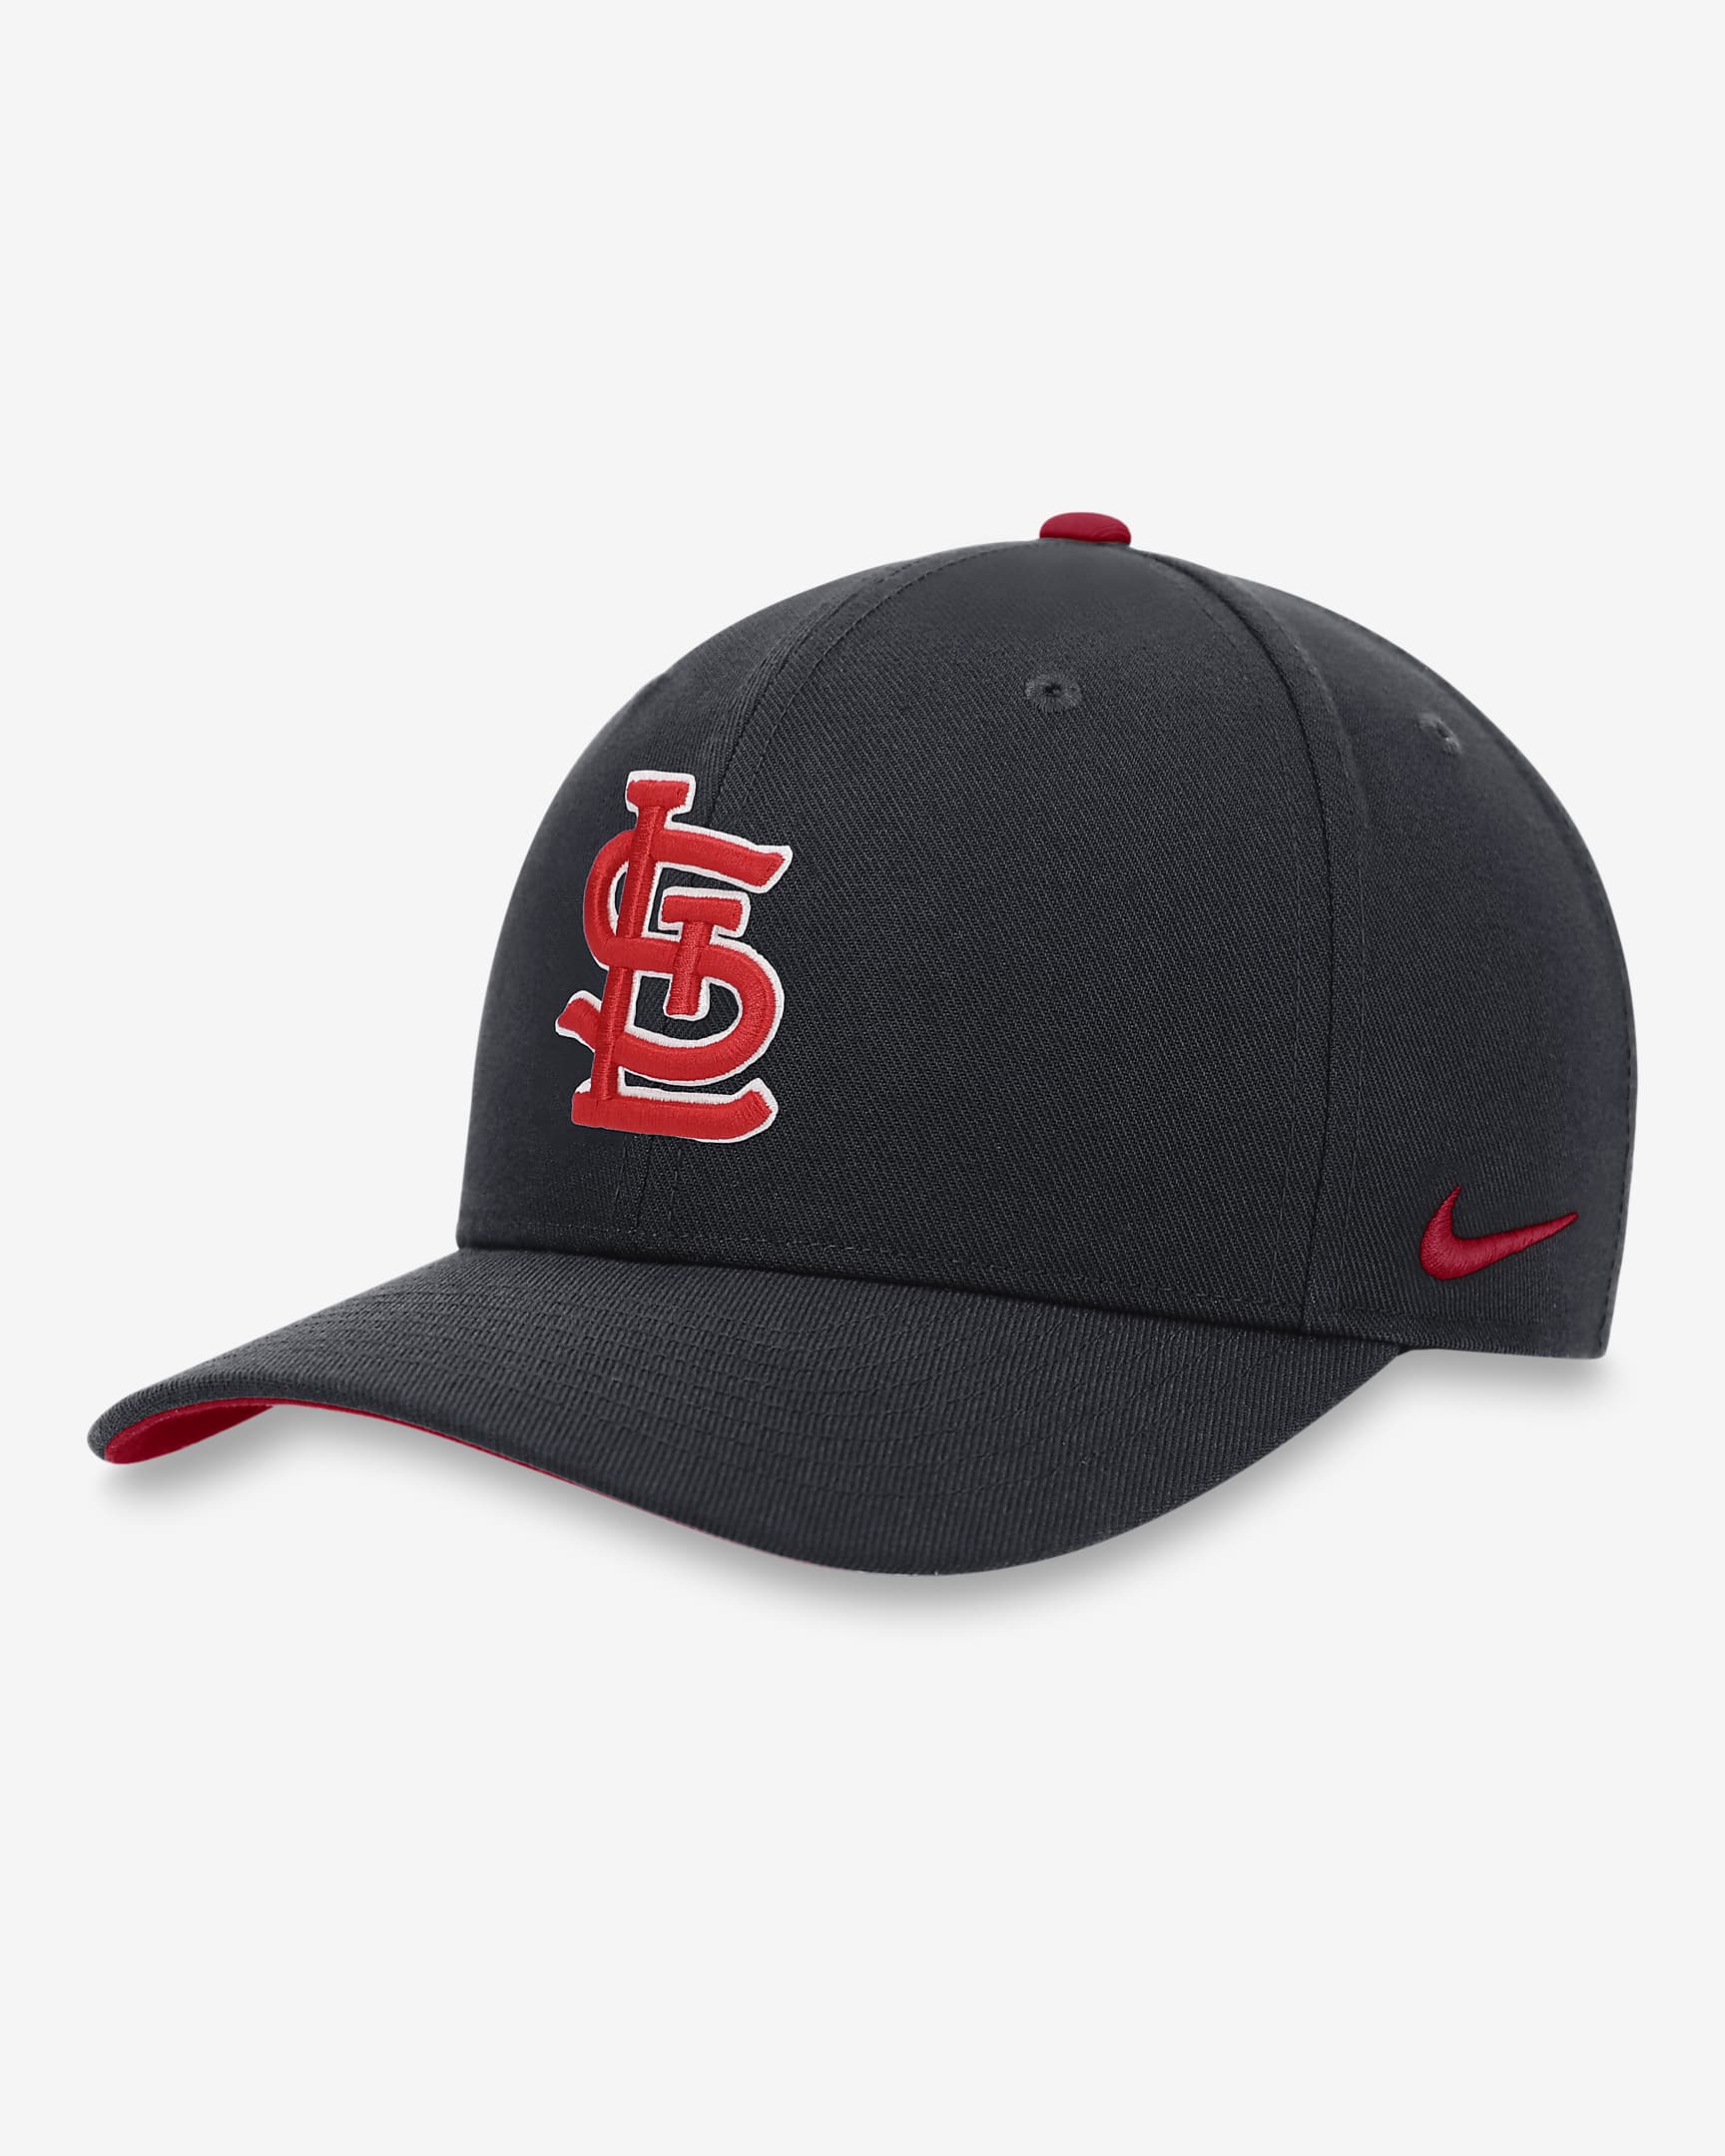 Gorra ajustable Nike Dri-FIT MLB para hombre St. Louis Cardinals ...